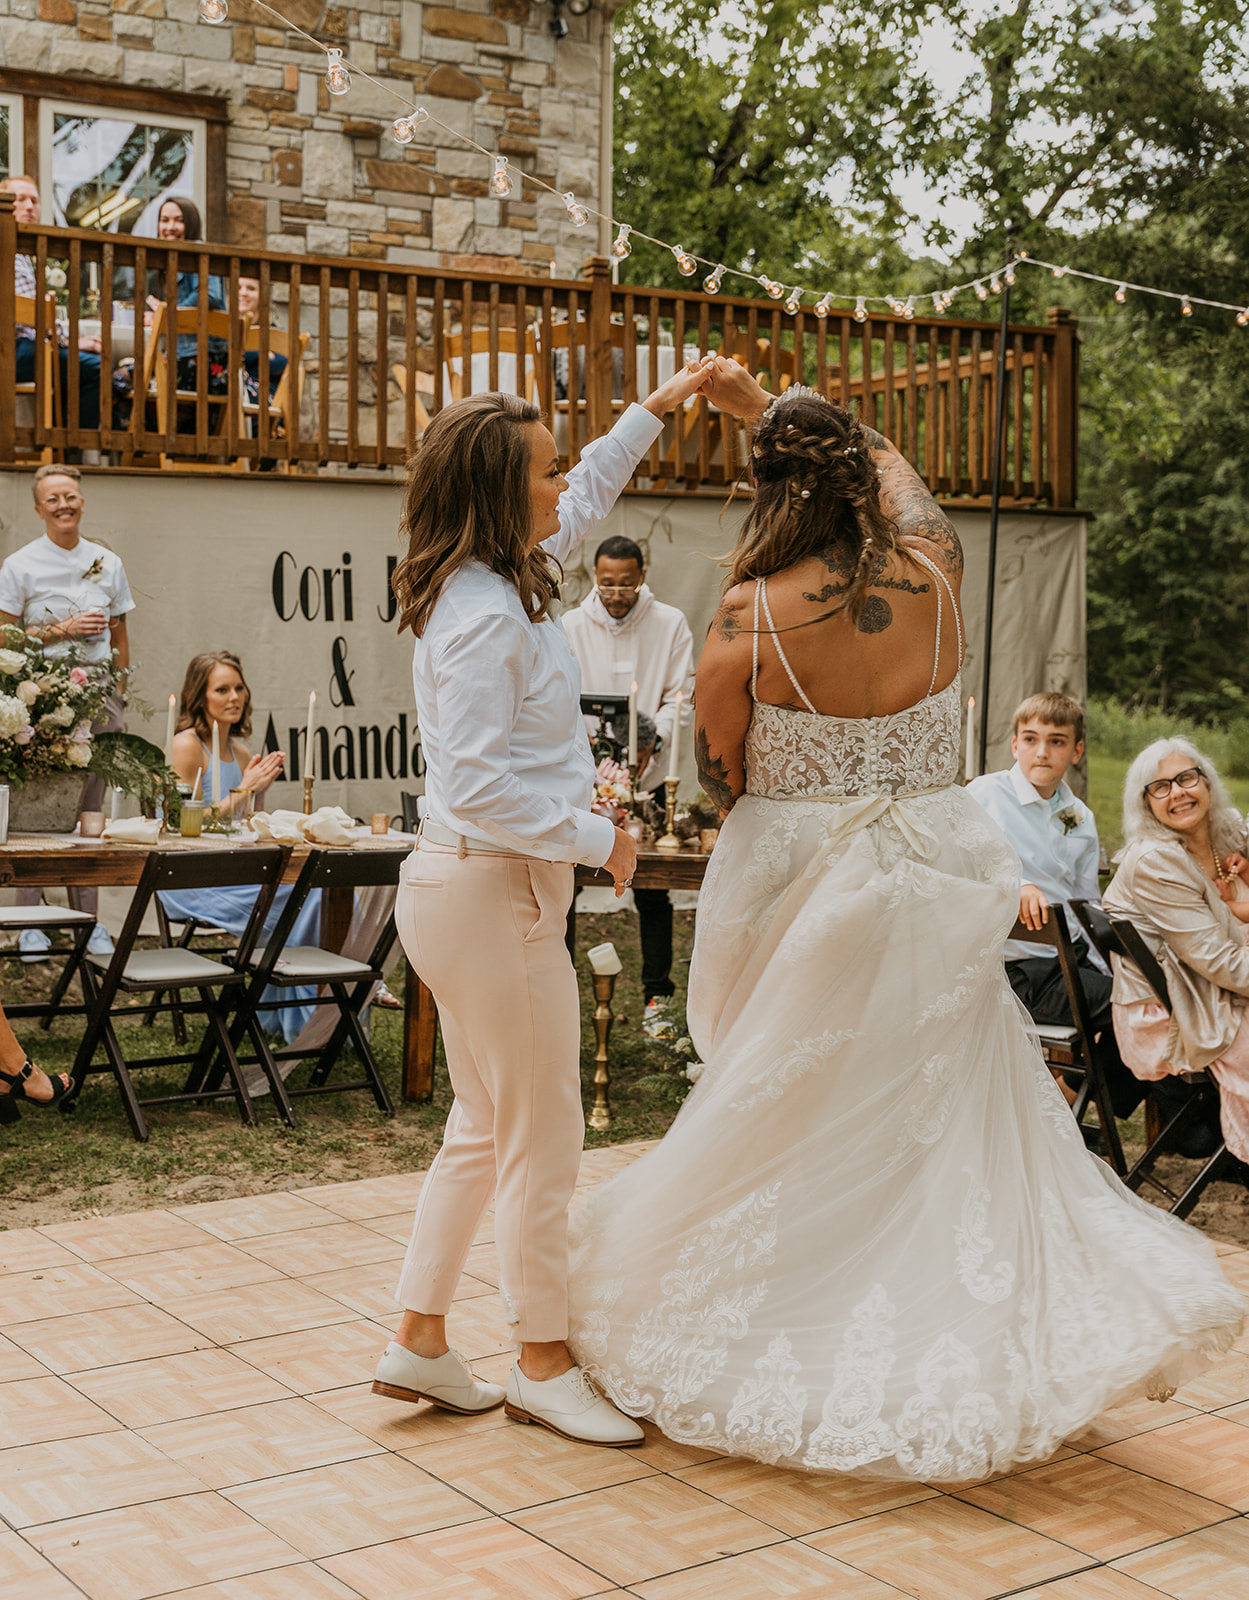 LGBTQ+ micro-wedding eureka springs Arkansas couples dance